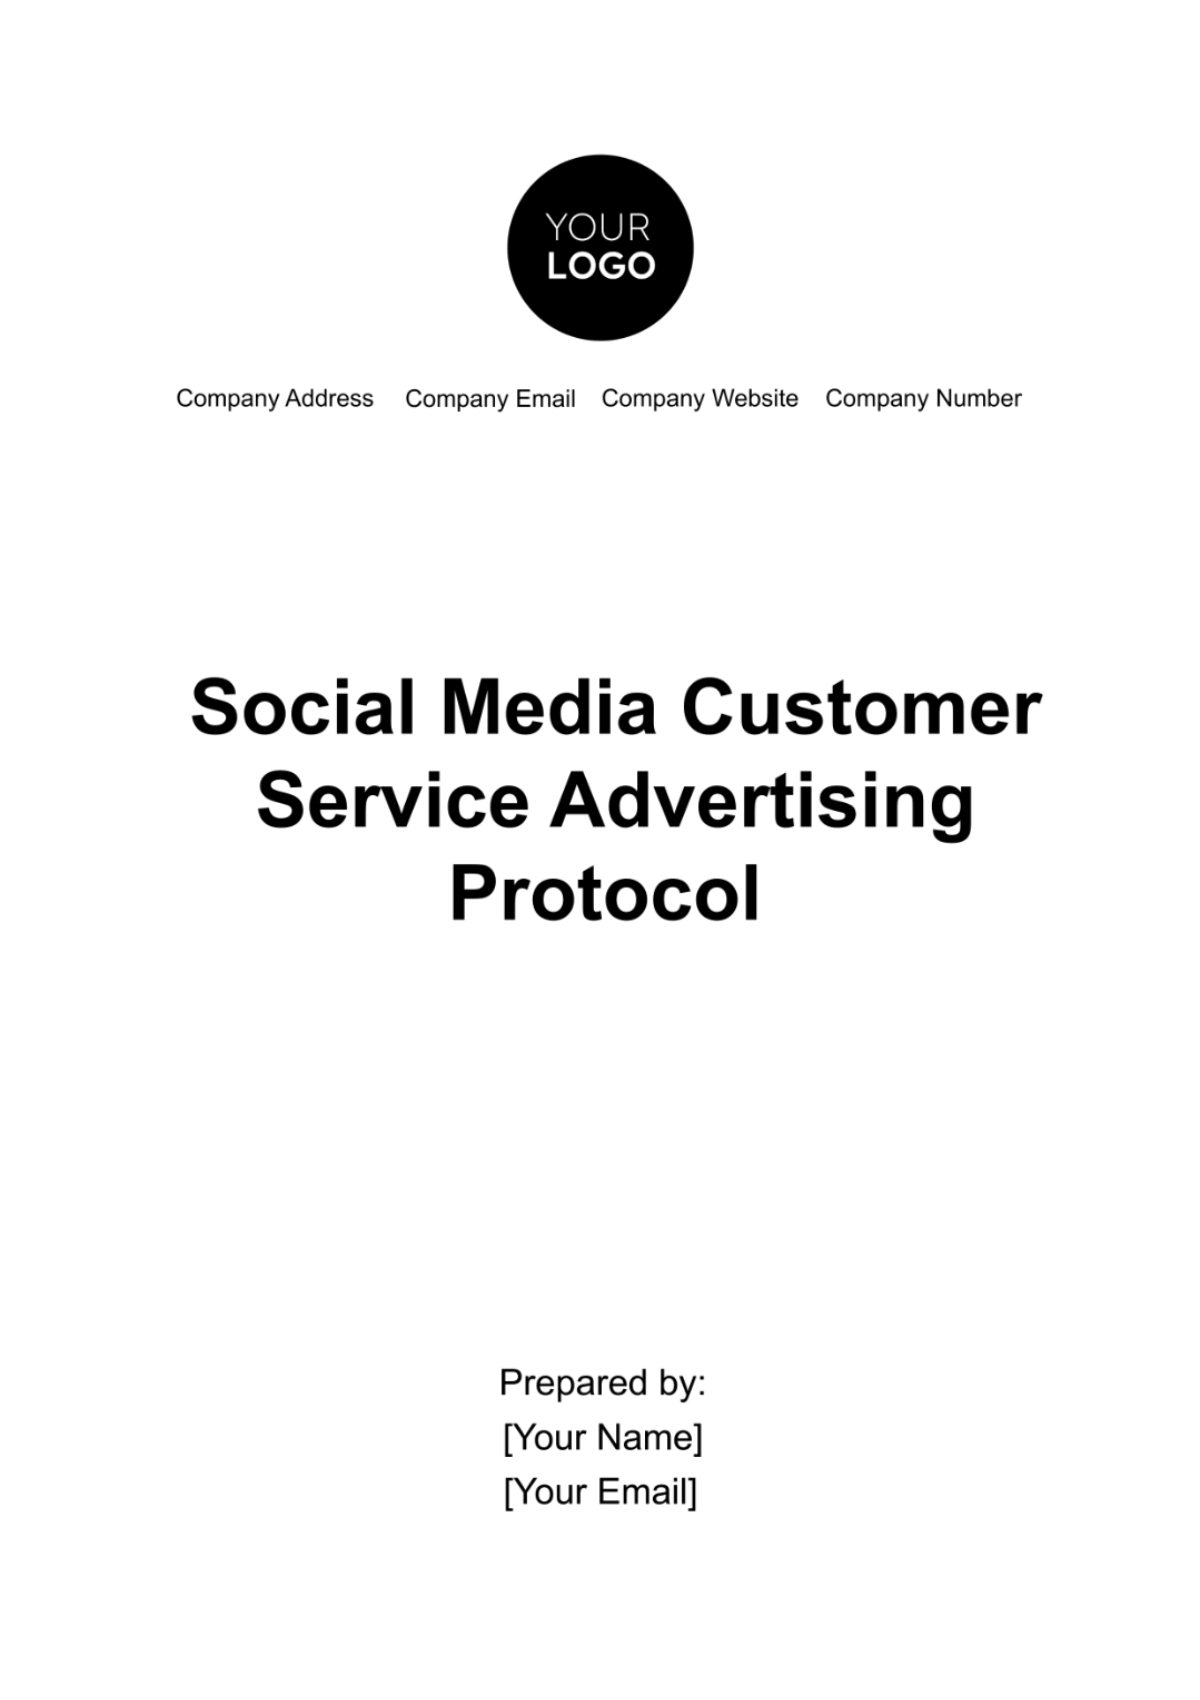 Social Media Customer Service Advertising Protocol Template